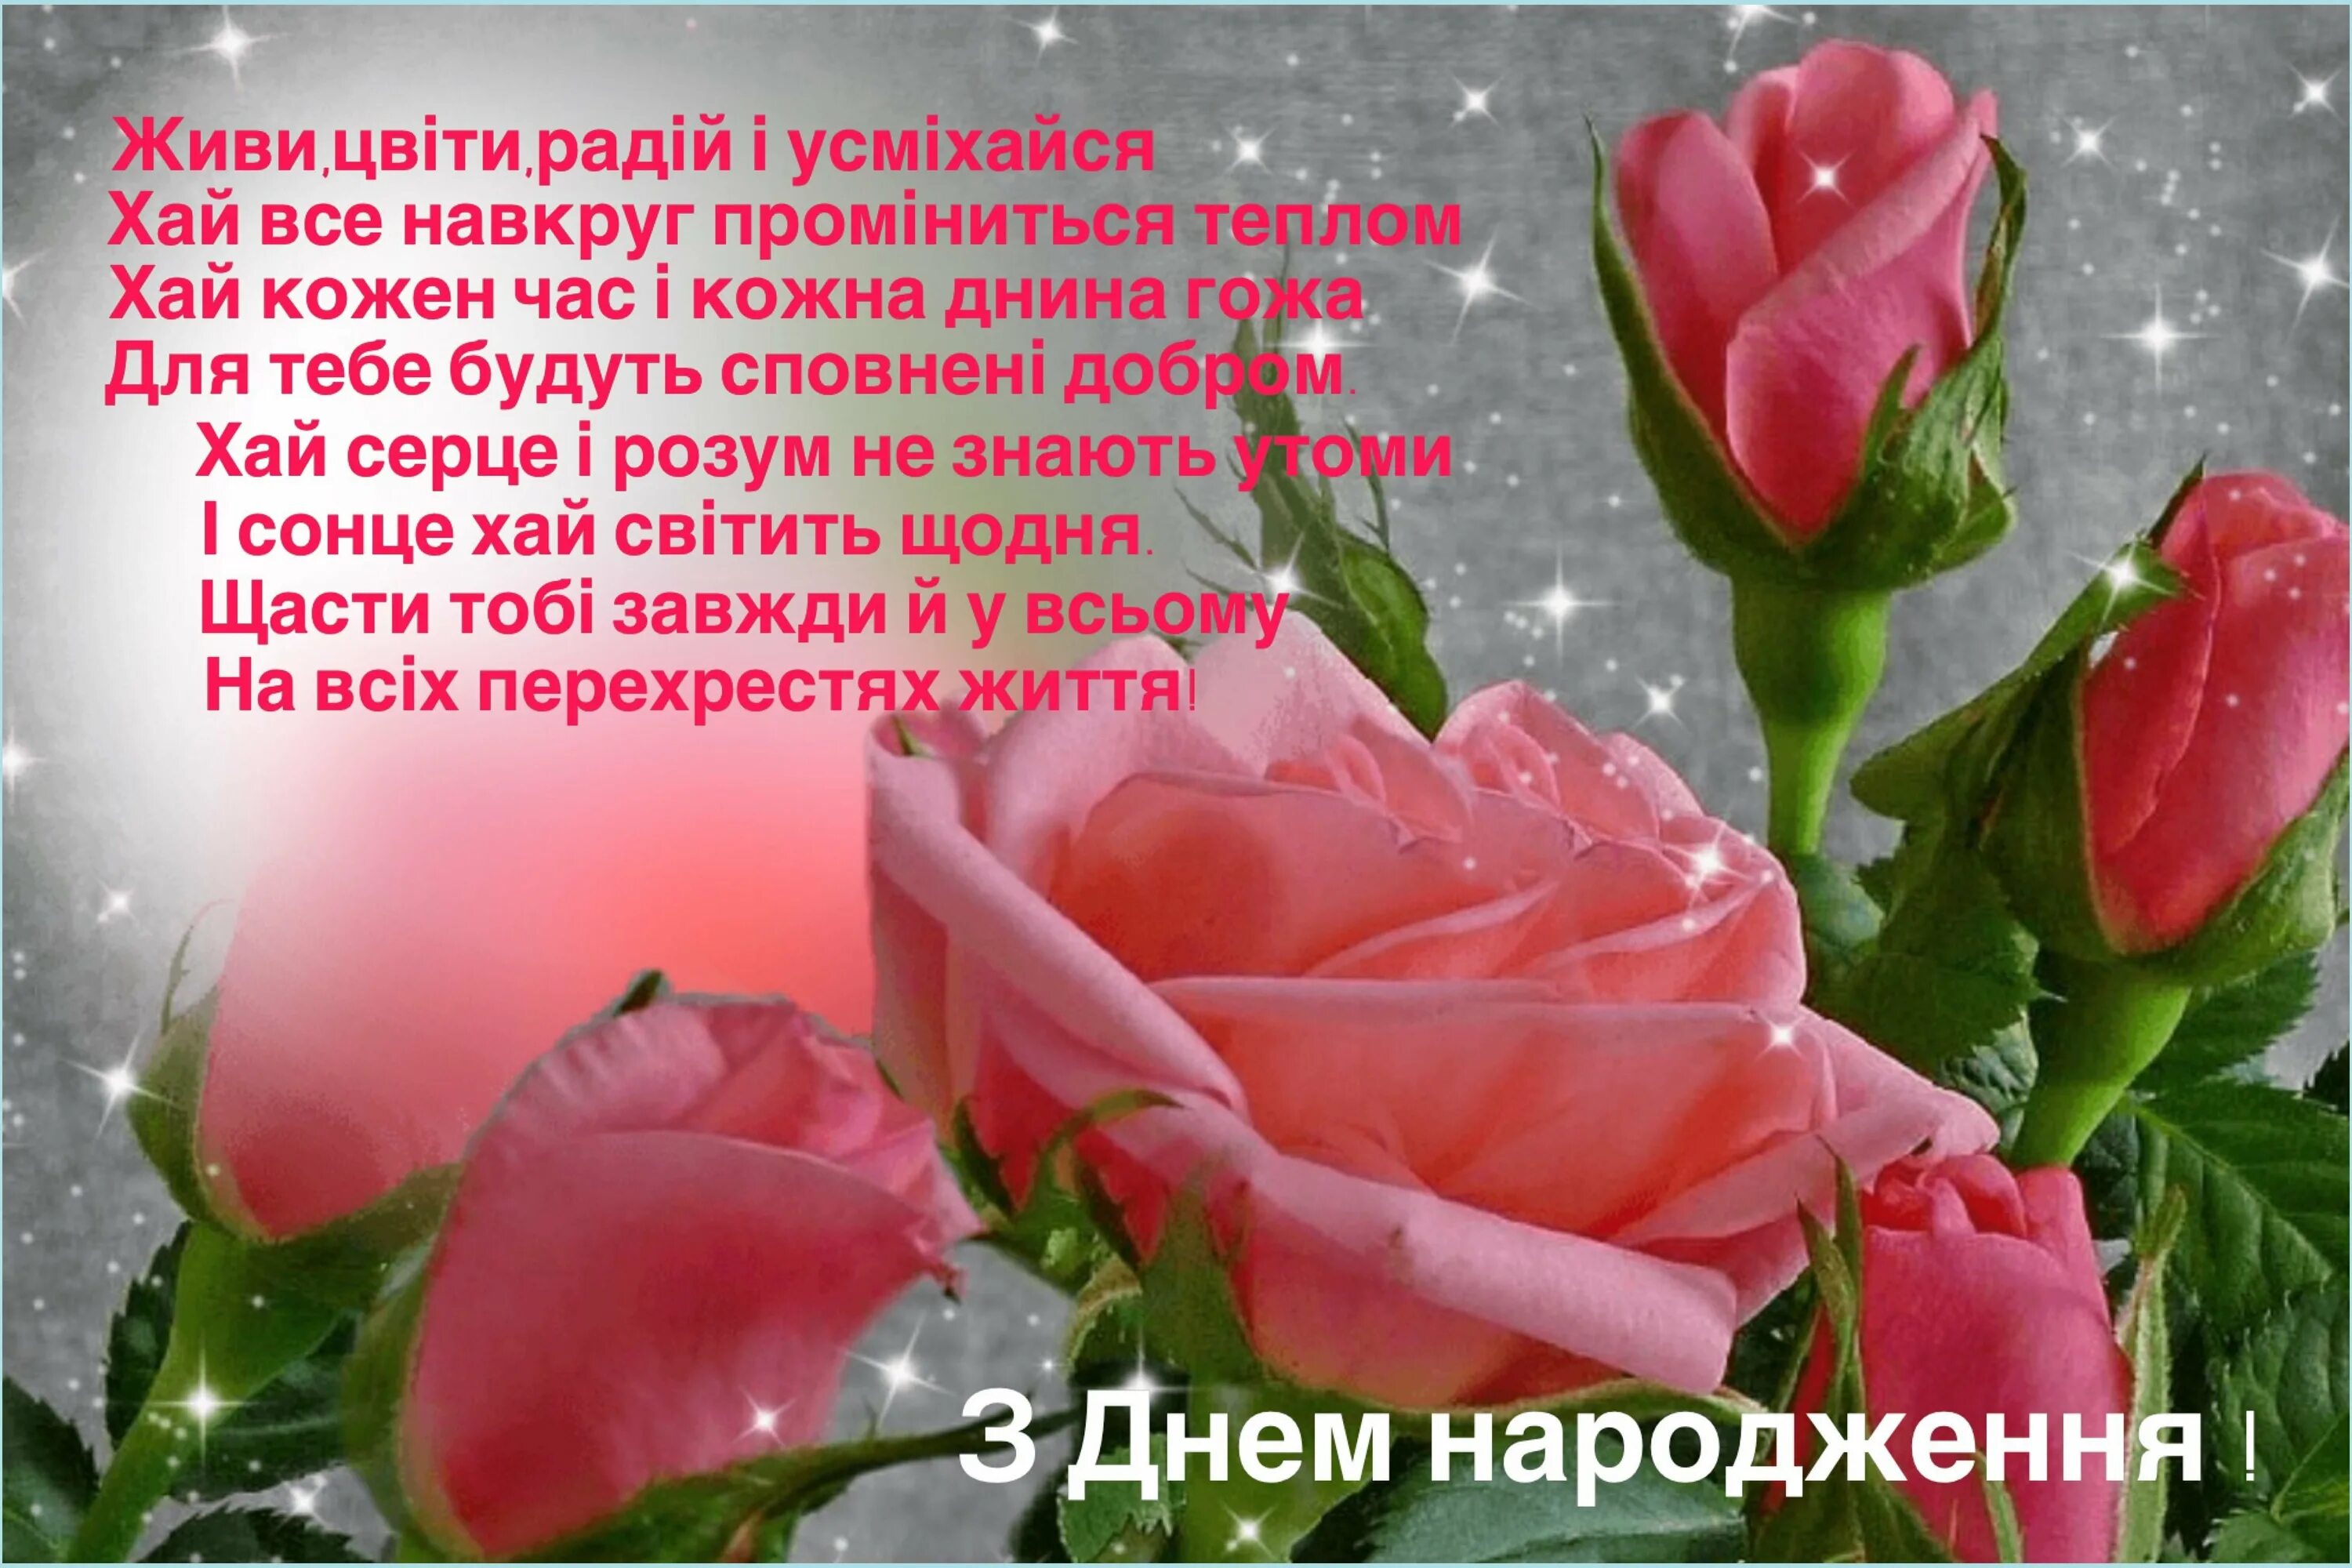 Поздравления на украинском языке. Привітання з днем народження. Поздравление с днем рождения на украинском. Красивое поздравление с днём рождения на украинском языке. Вітання з днем народження жінці.